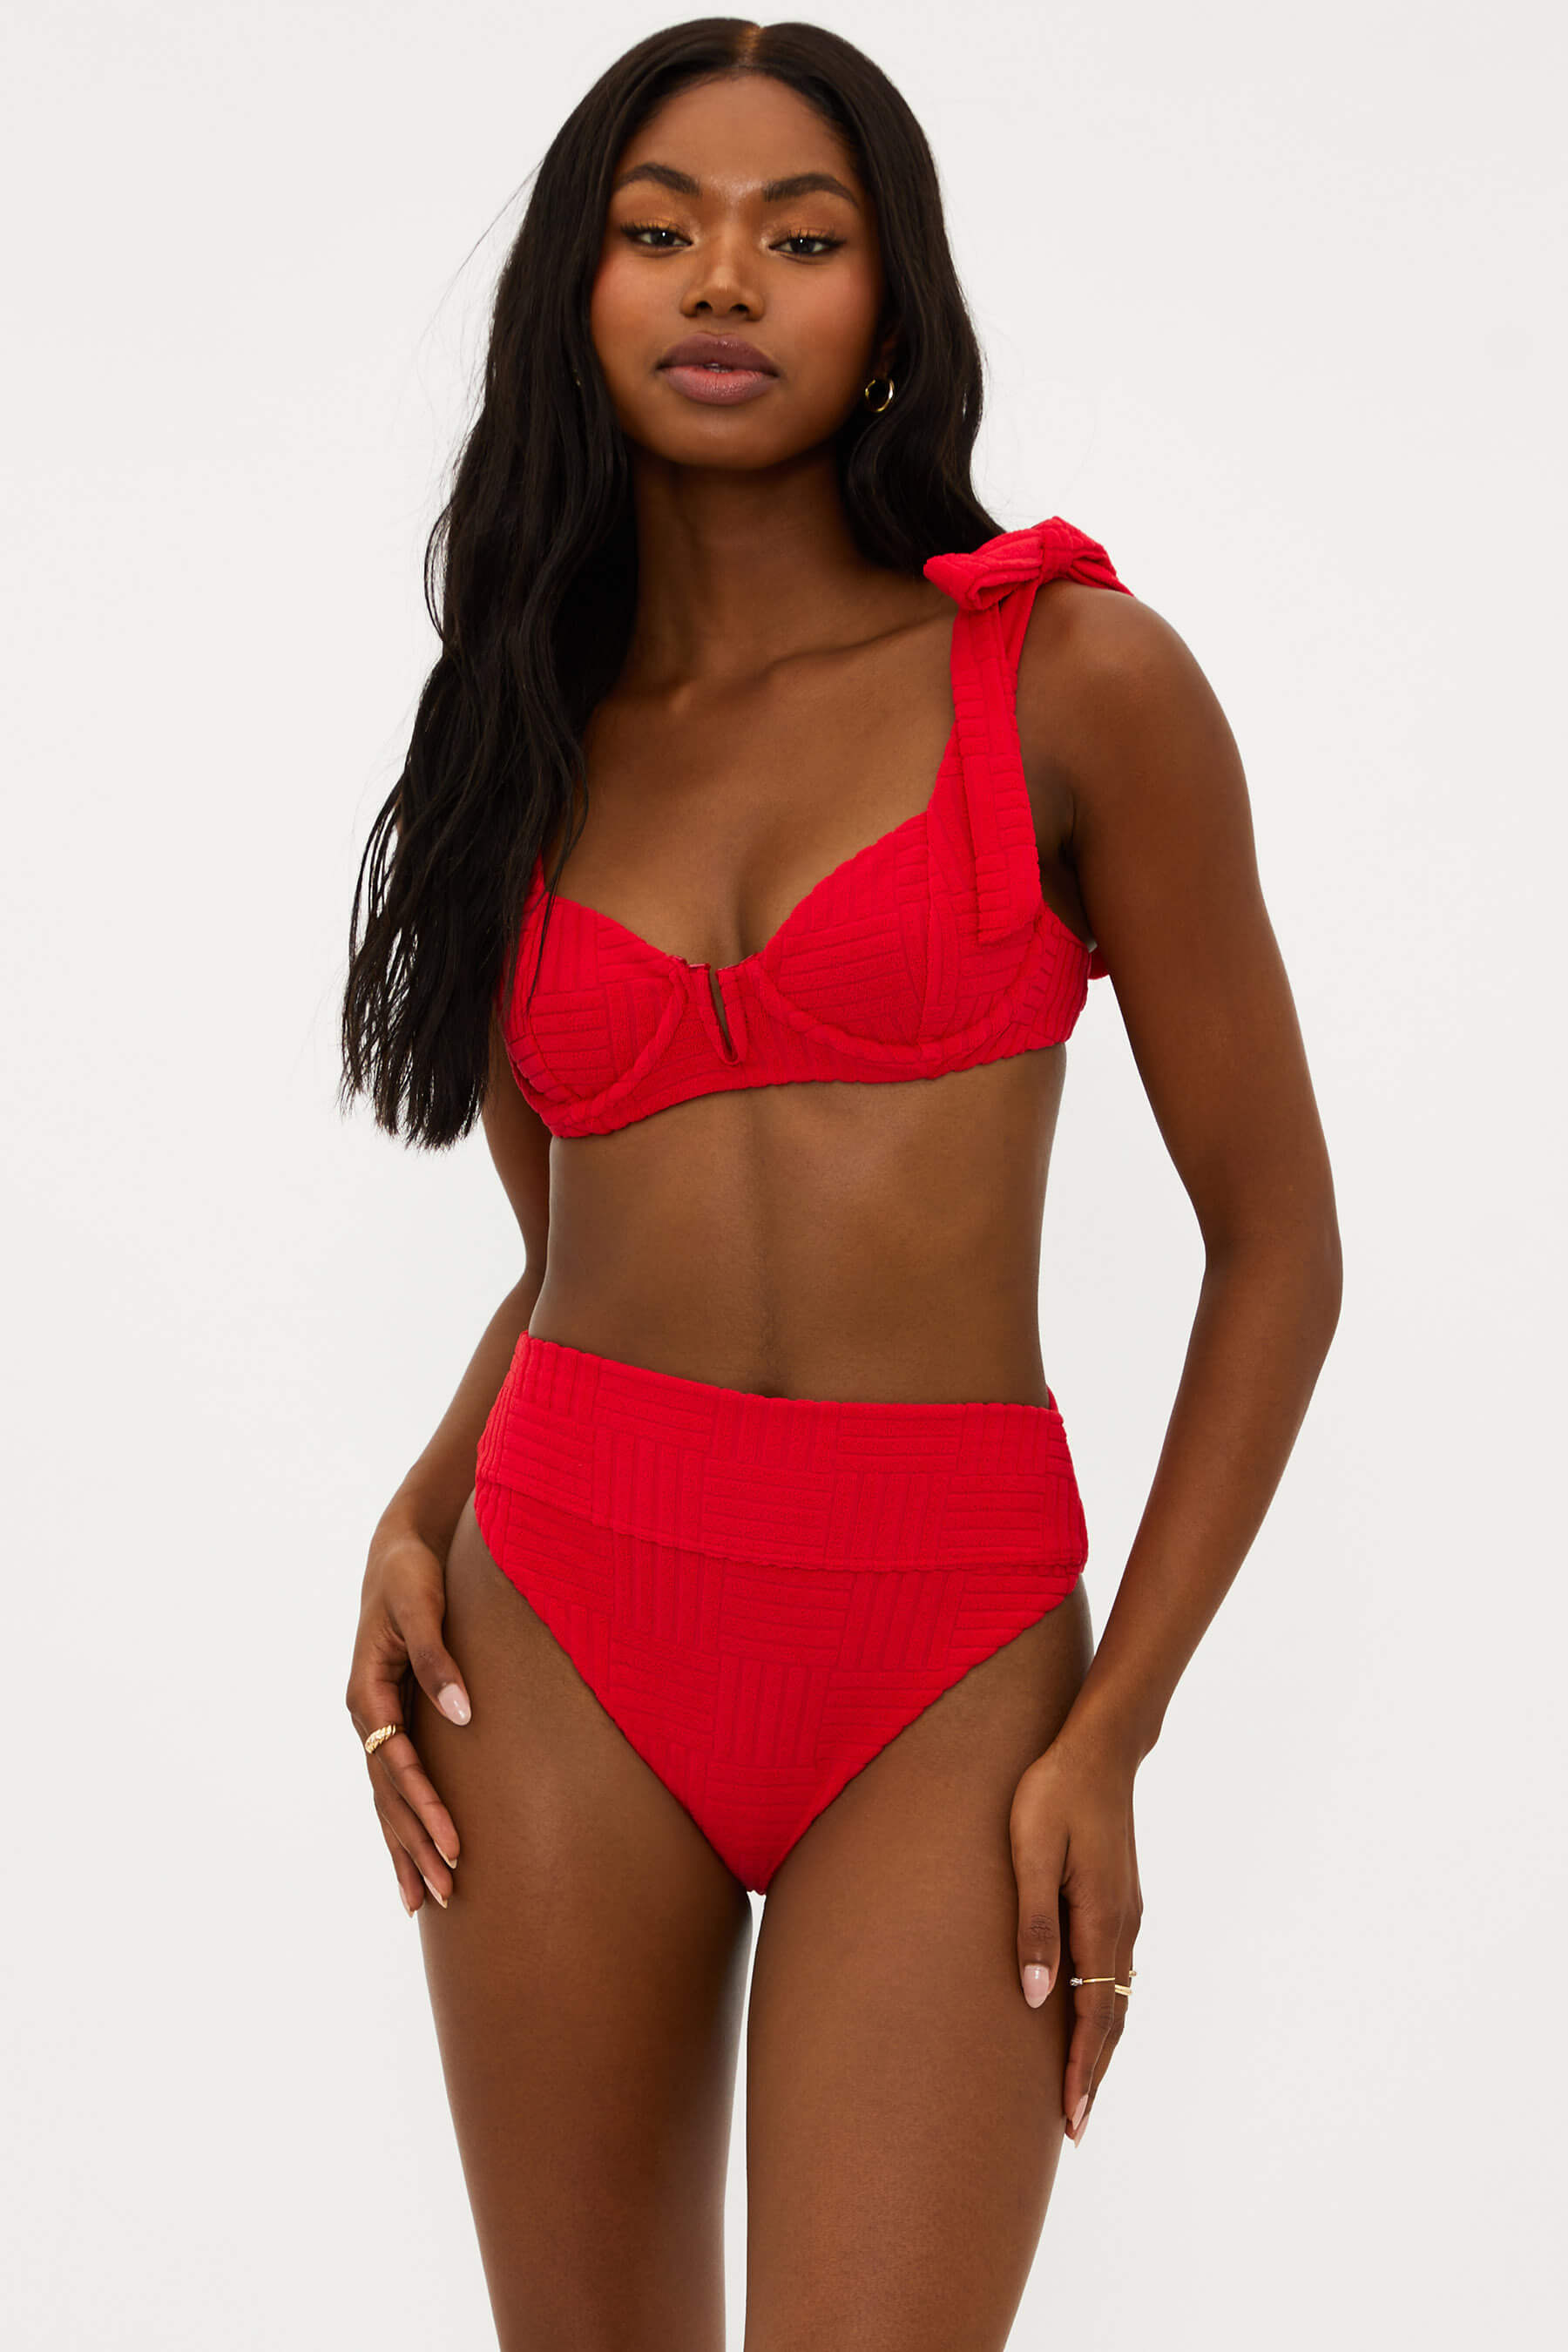 Ribbed Cherry Red Bandeau Bikini Top - HY BRASIL - bikiniland